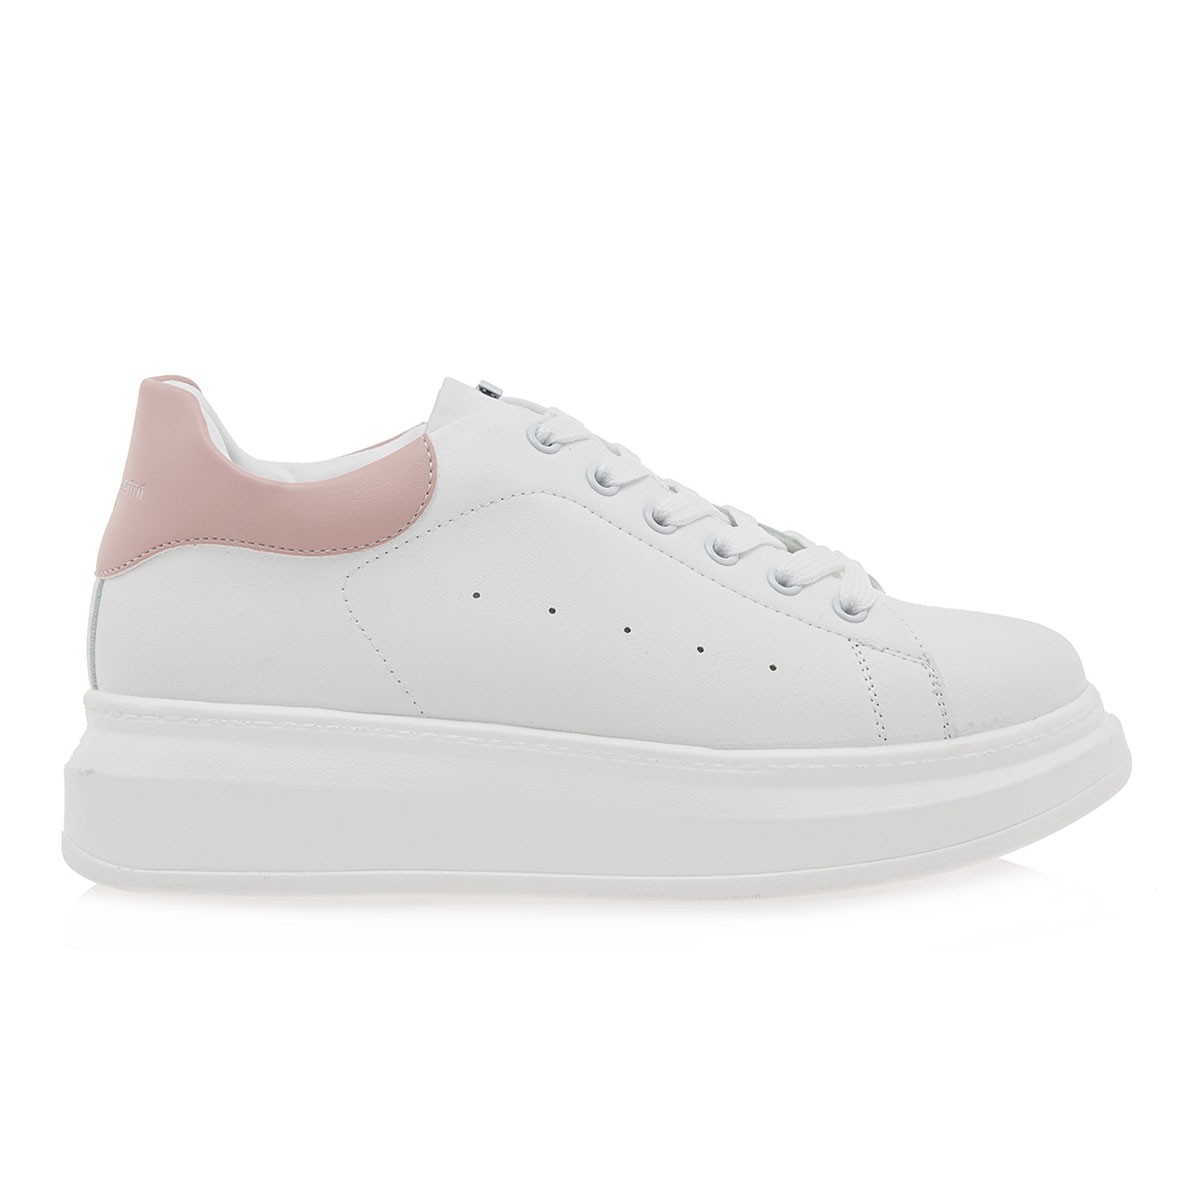 Renato Garini Γυναικεία Παπούτσια Sneakers 101-19R Λευκό Ροζ O119R1012193